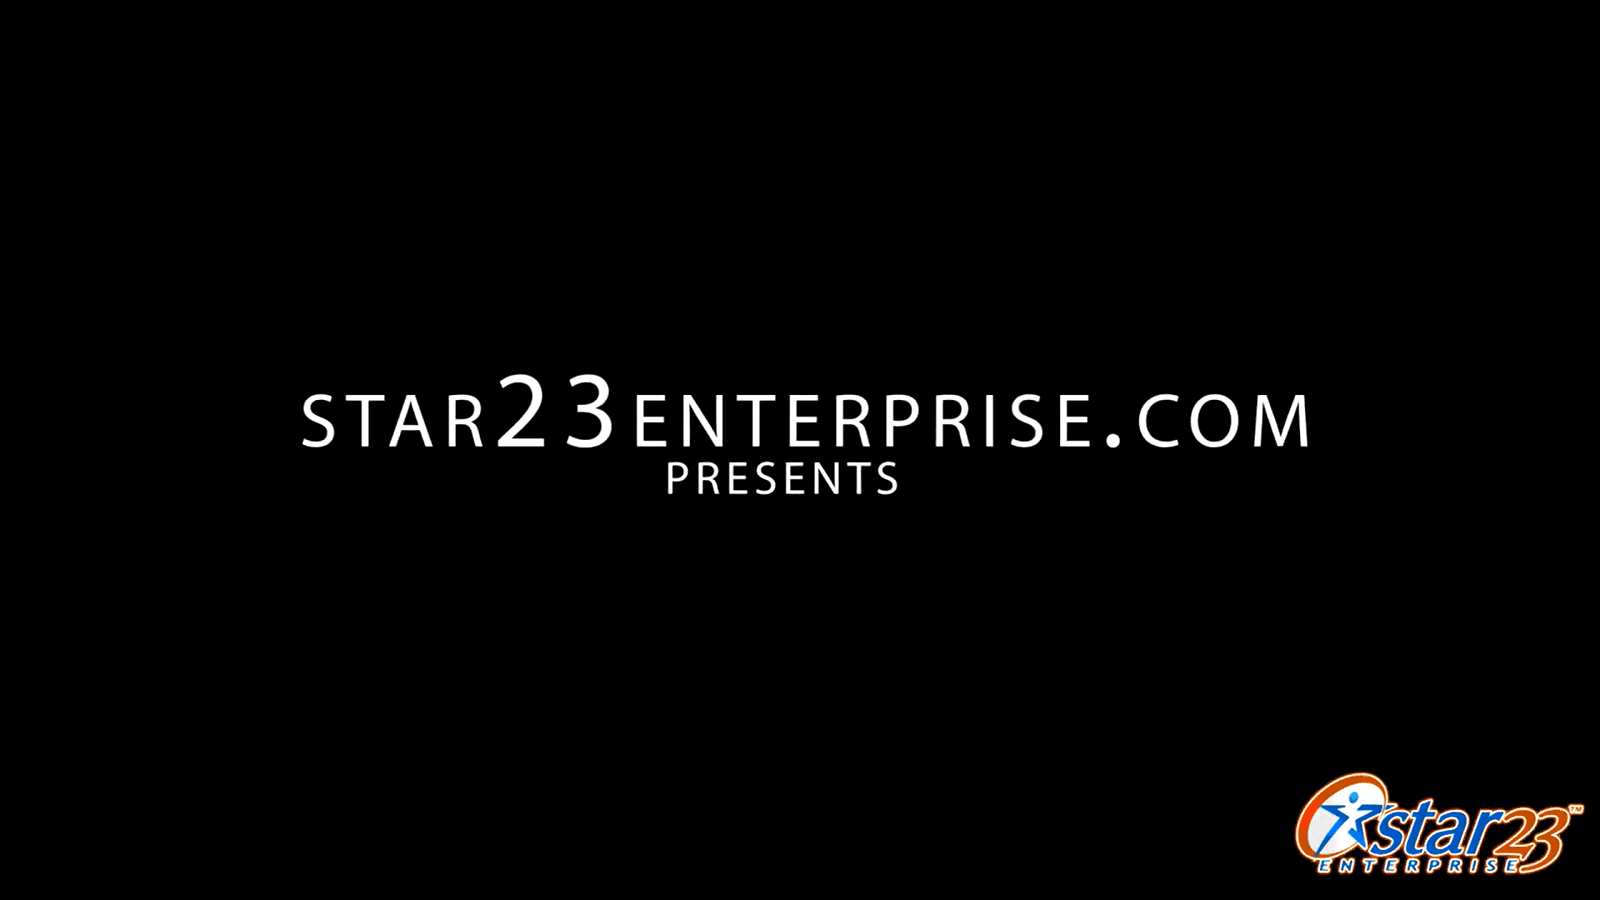 Star 23 Enterprise Presents